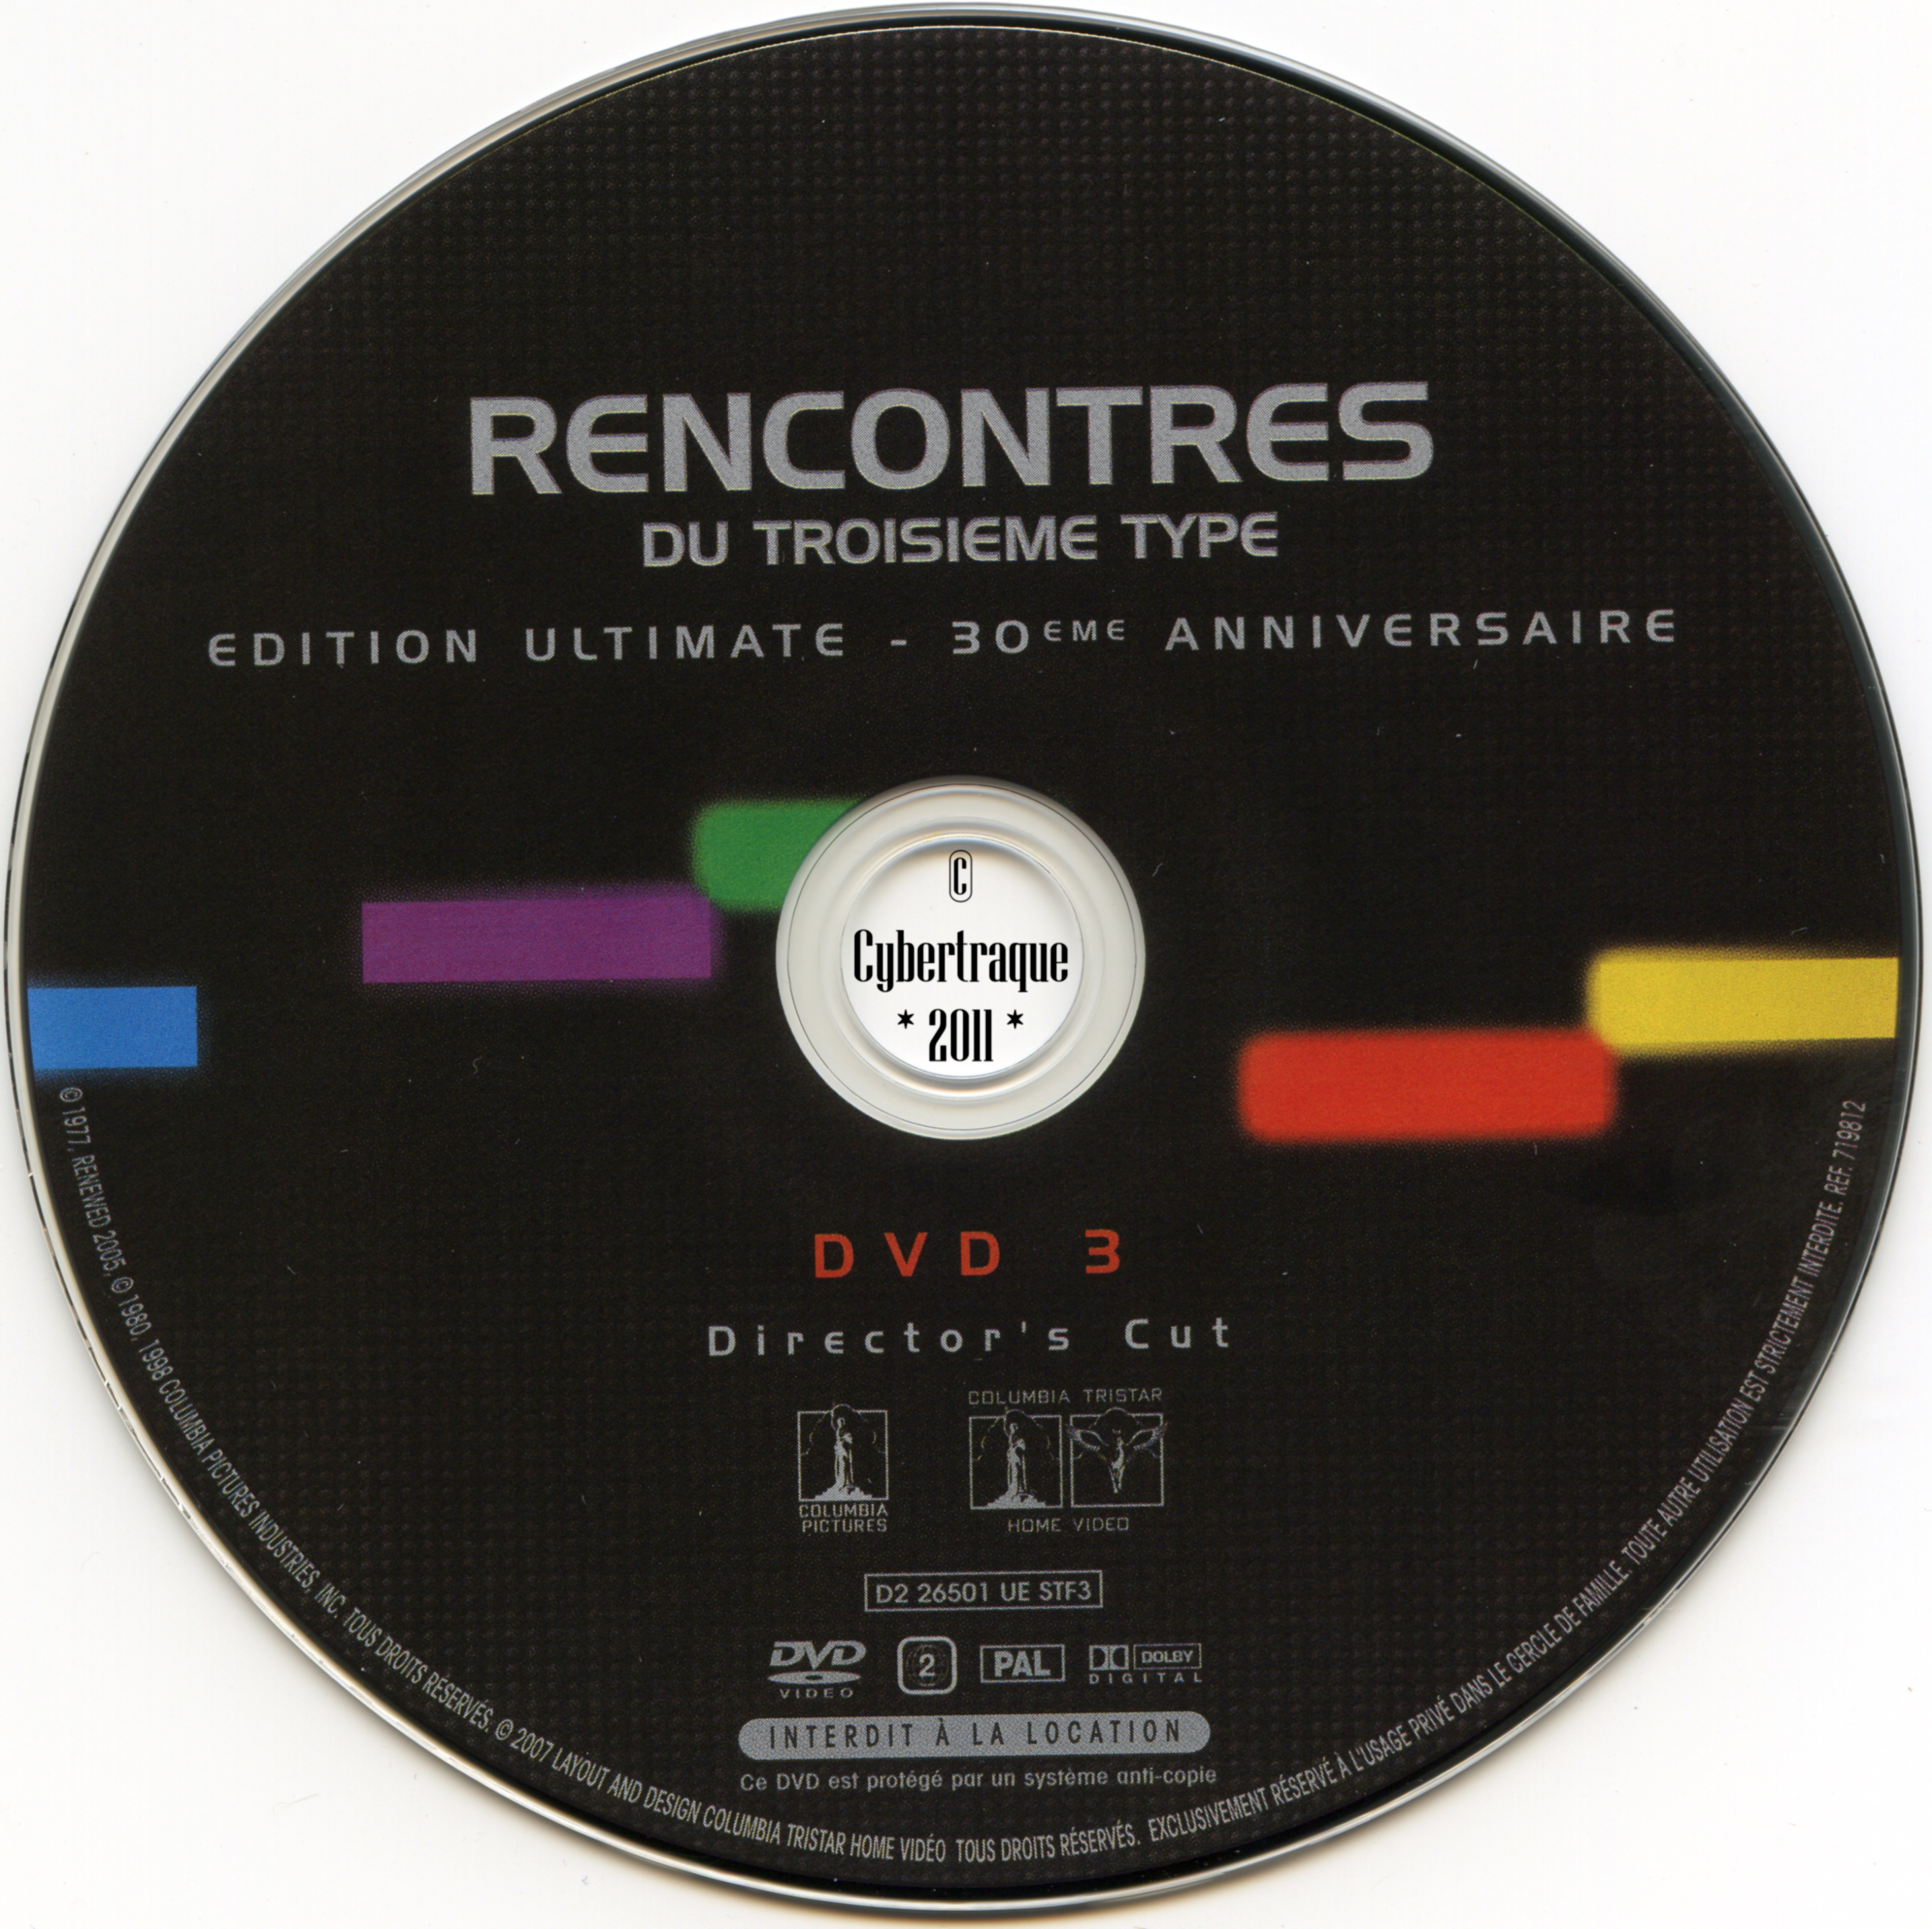 Rencontres du troisieme type Ultimate Edition DISC 3